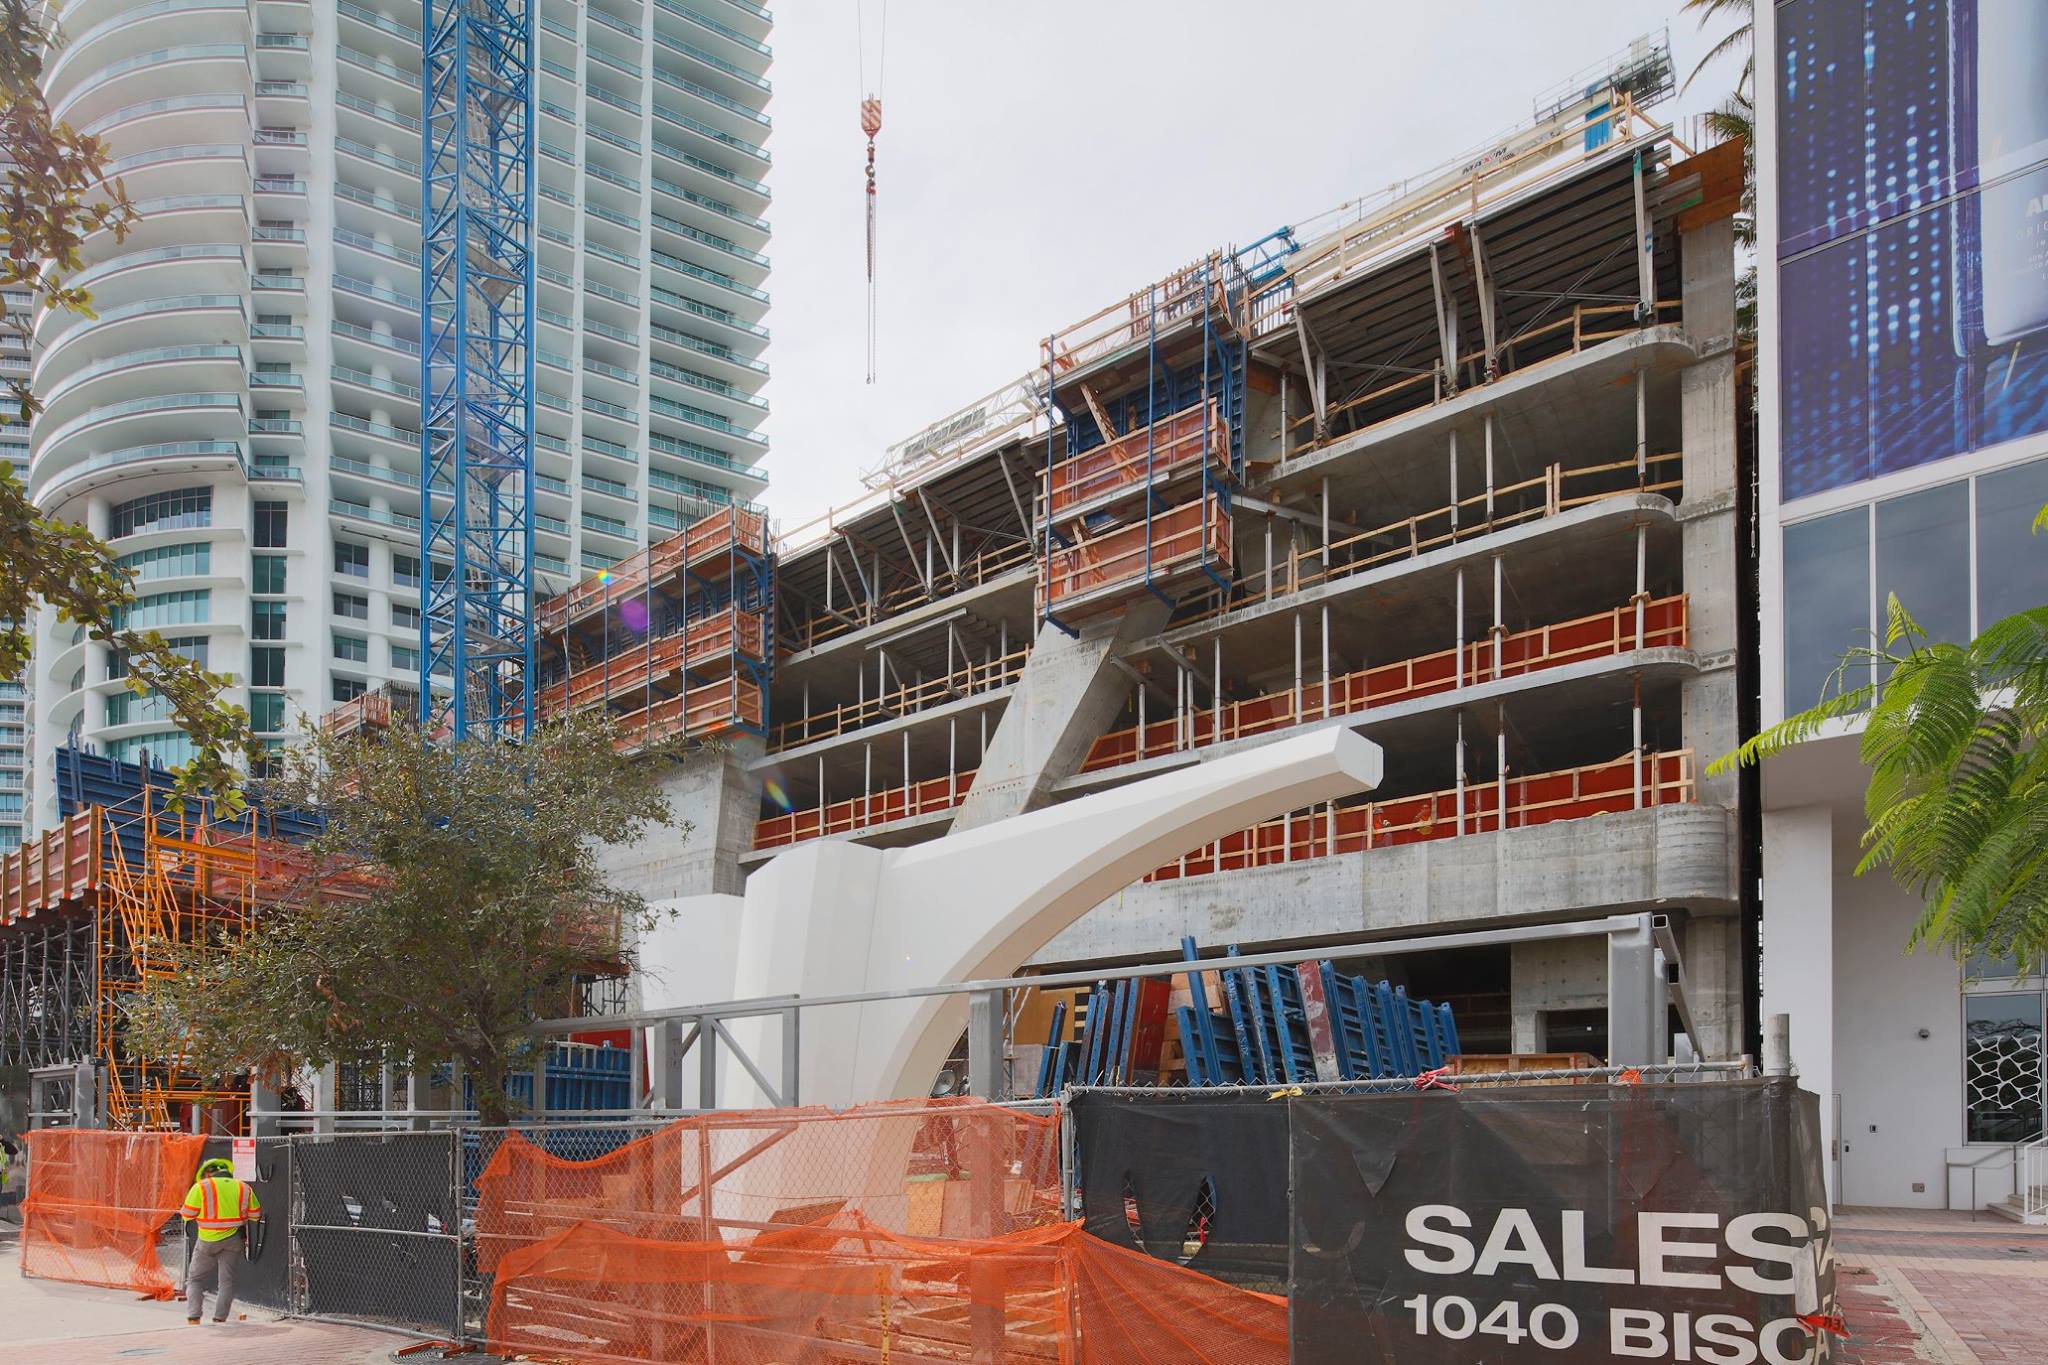 Construction Plows Ahead at Zaha Hadid’s One Thousand Museum